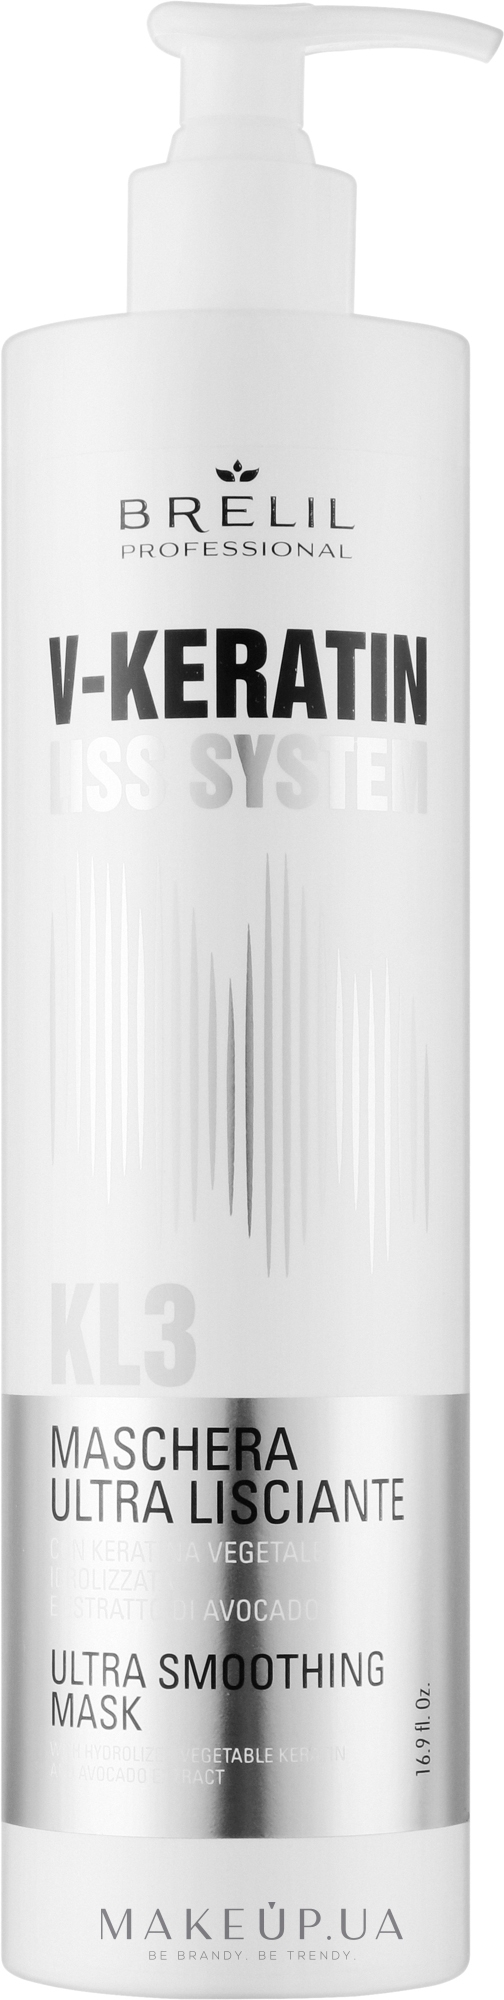 Ультраефективна розгладжувальна маска для волосся - Brelil V-Keratin Liss System KL3 Ultra Smoothing Mask — фото 500ml